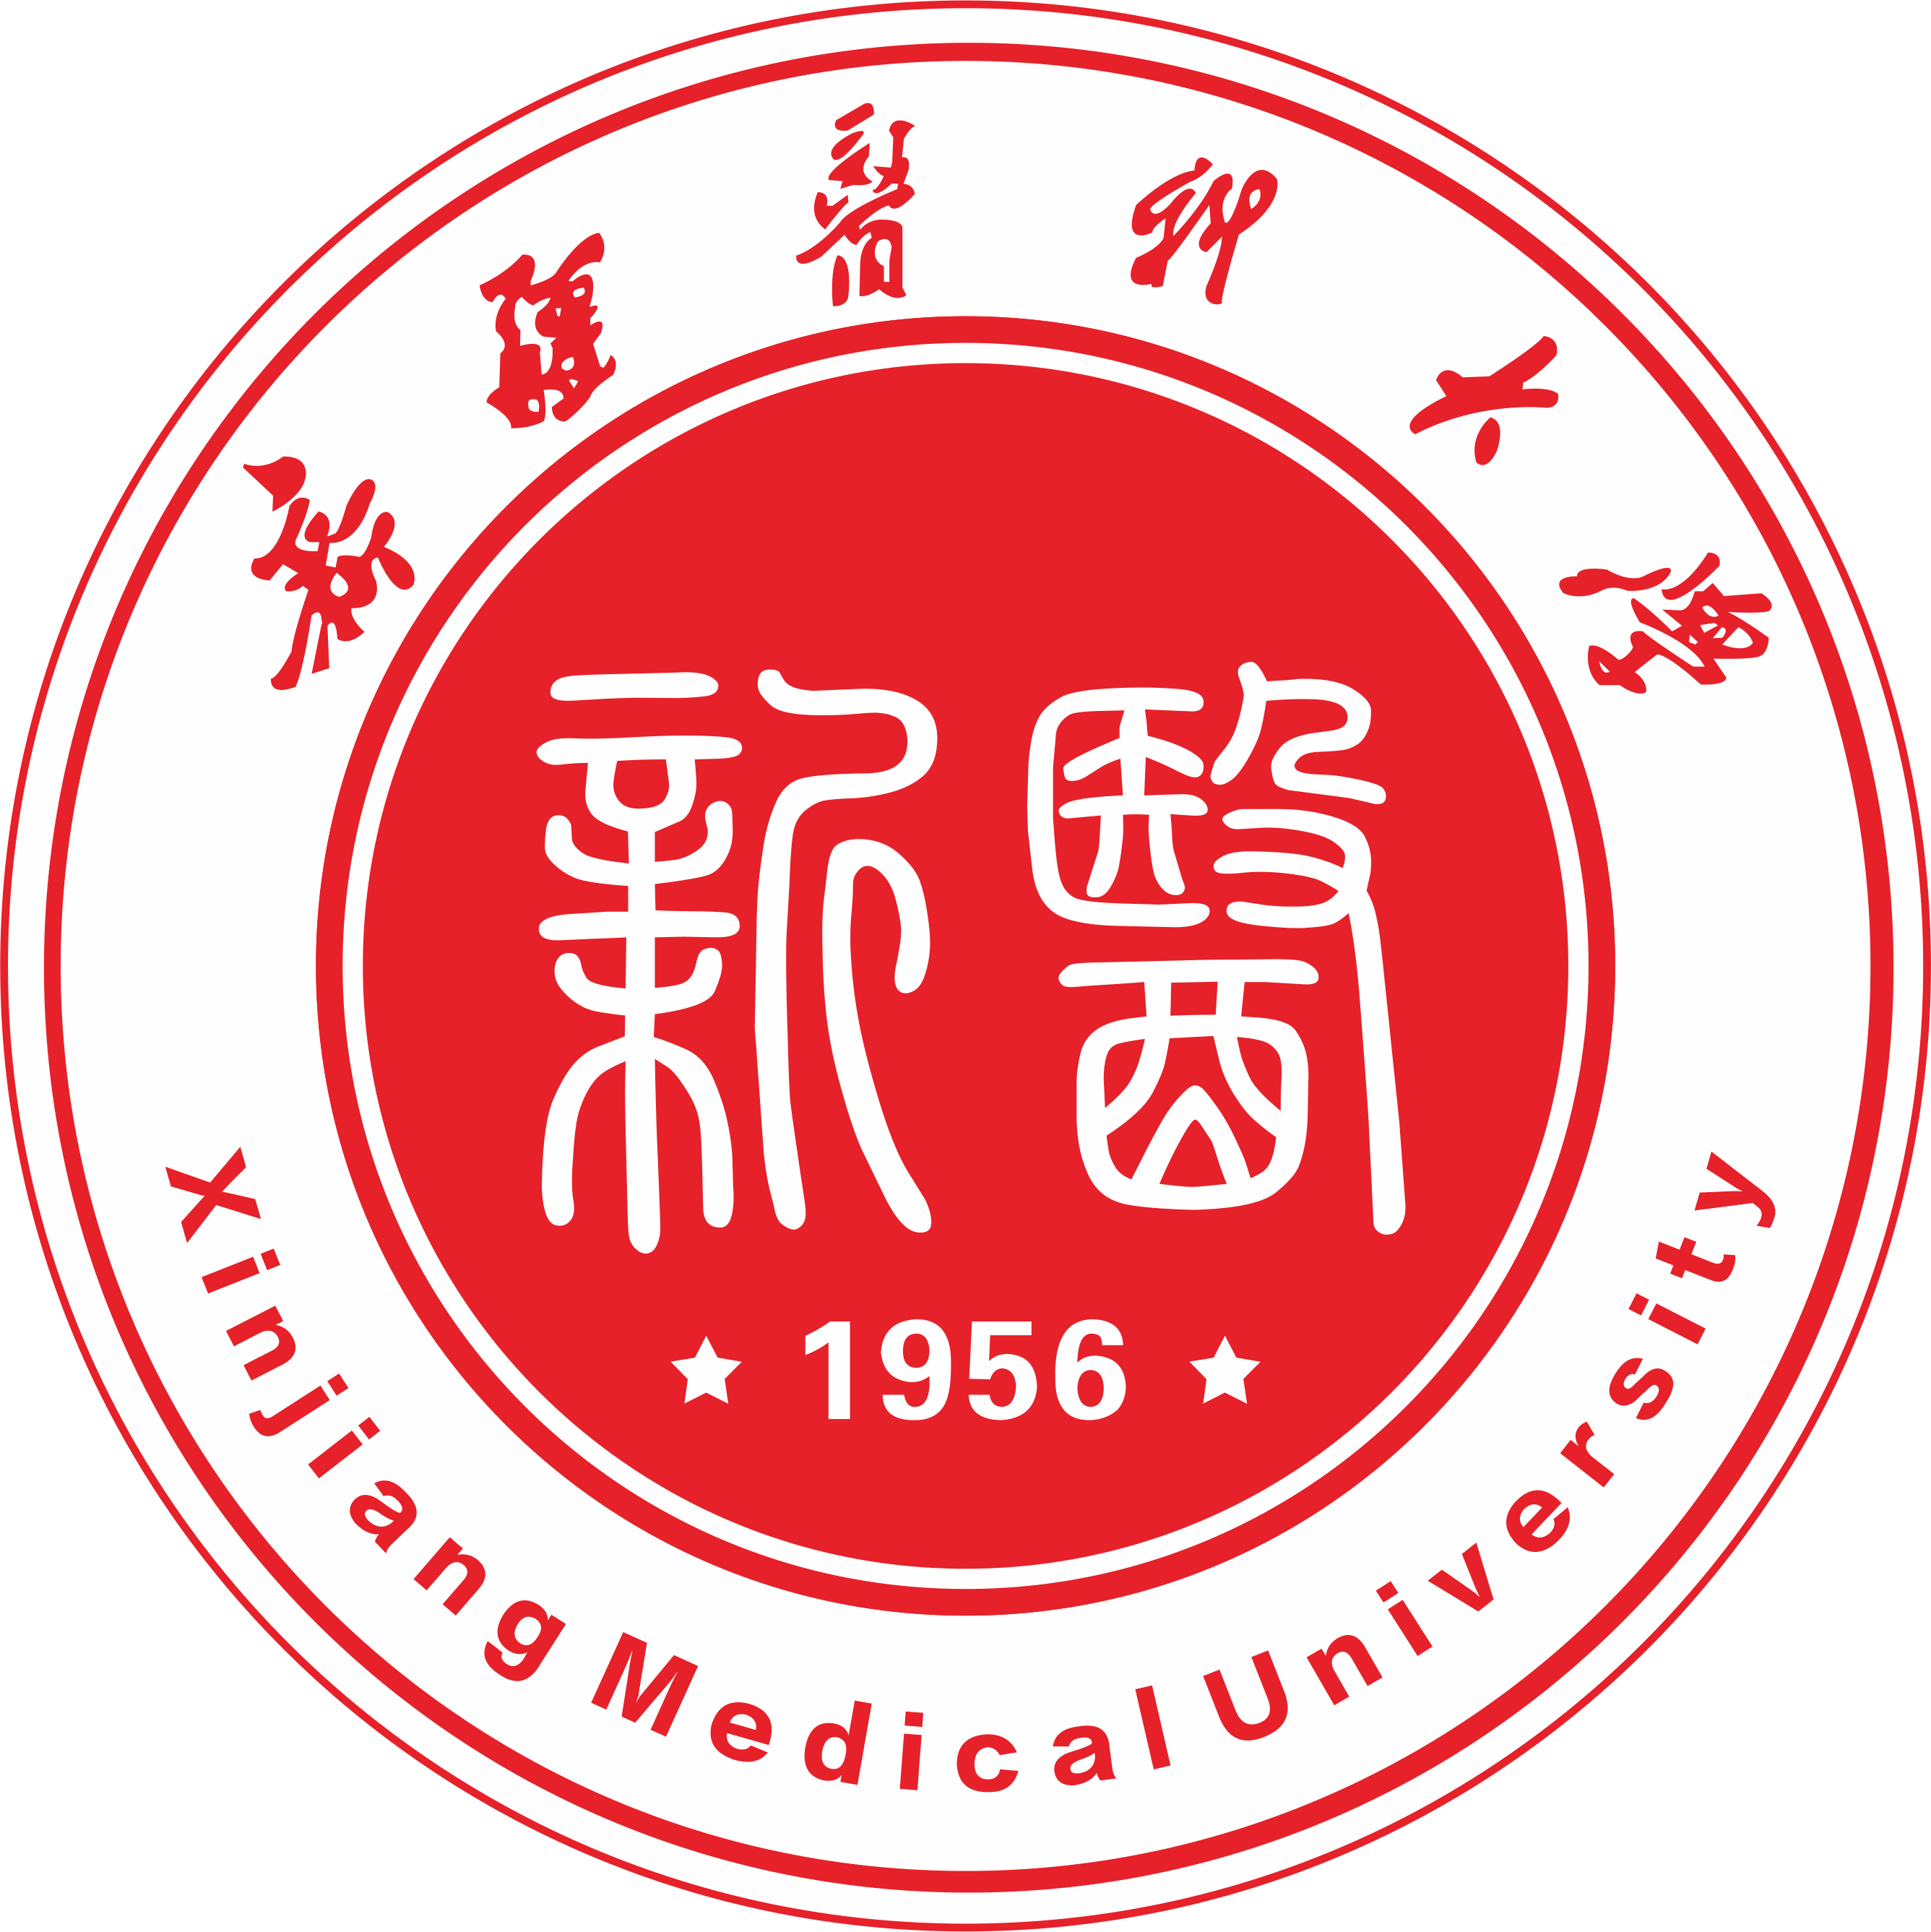 Xinjiang Medical University's logo